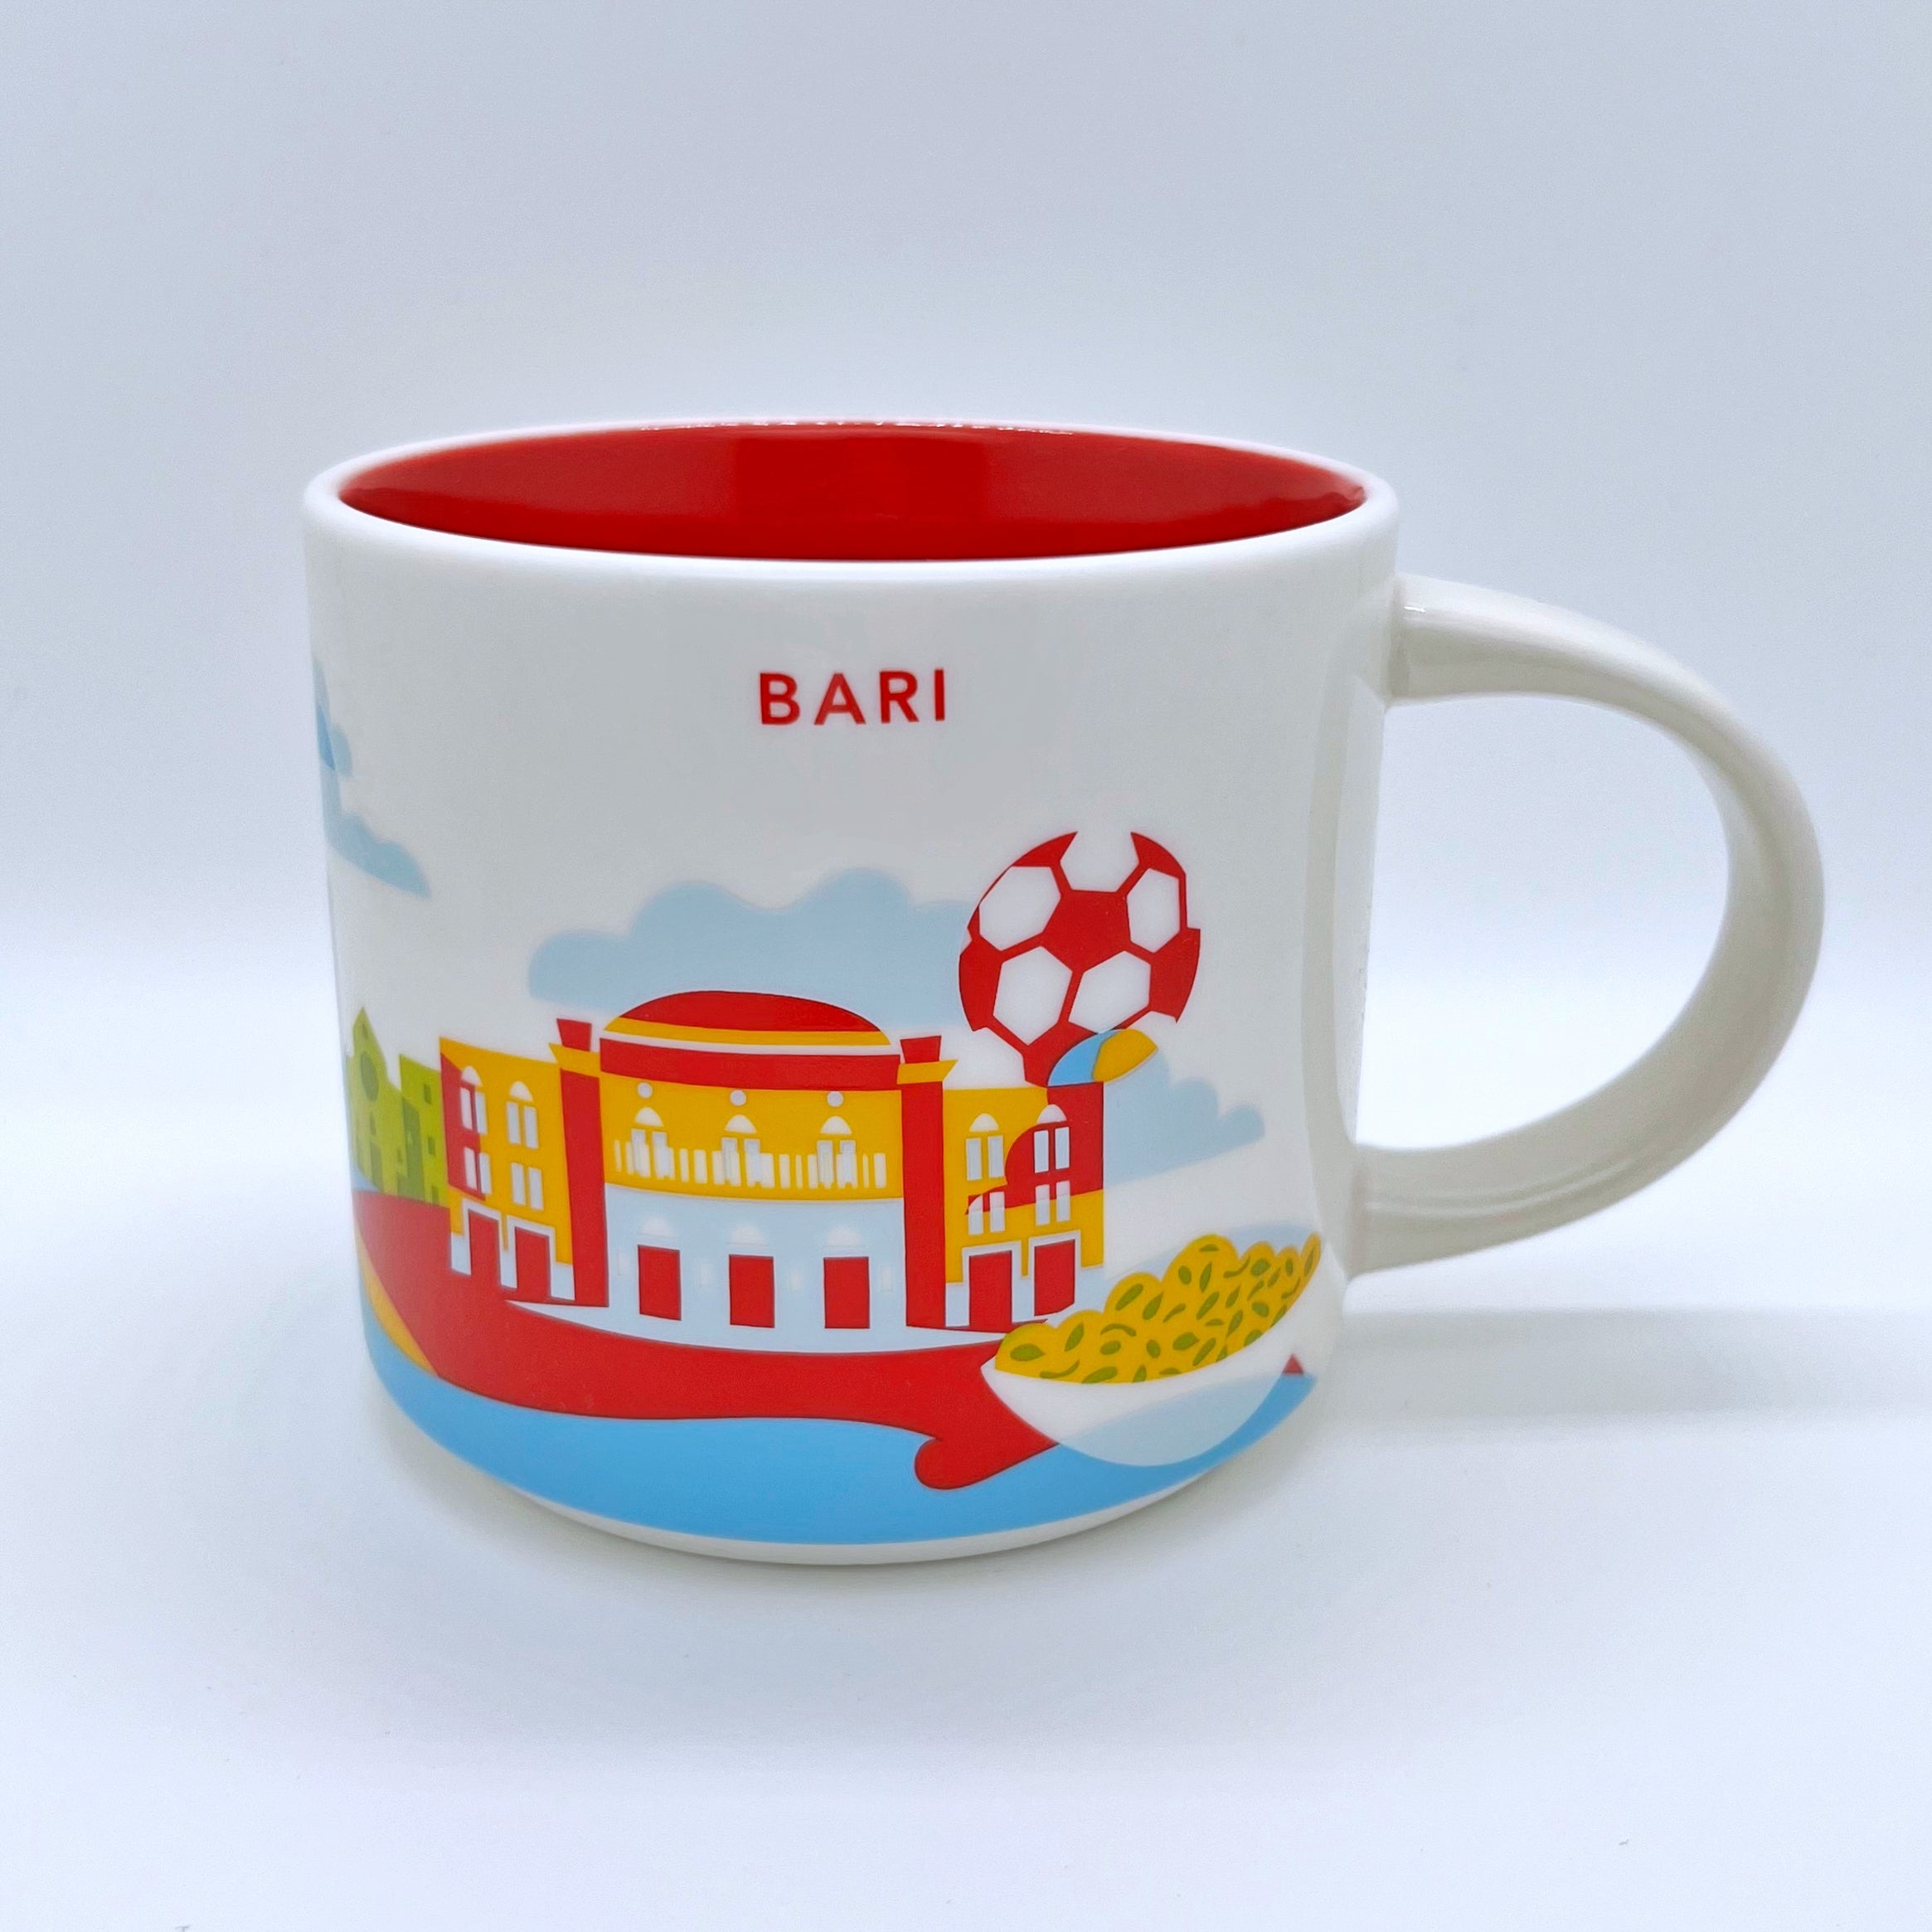 Bari City Kaffee Tasse